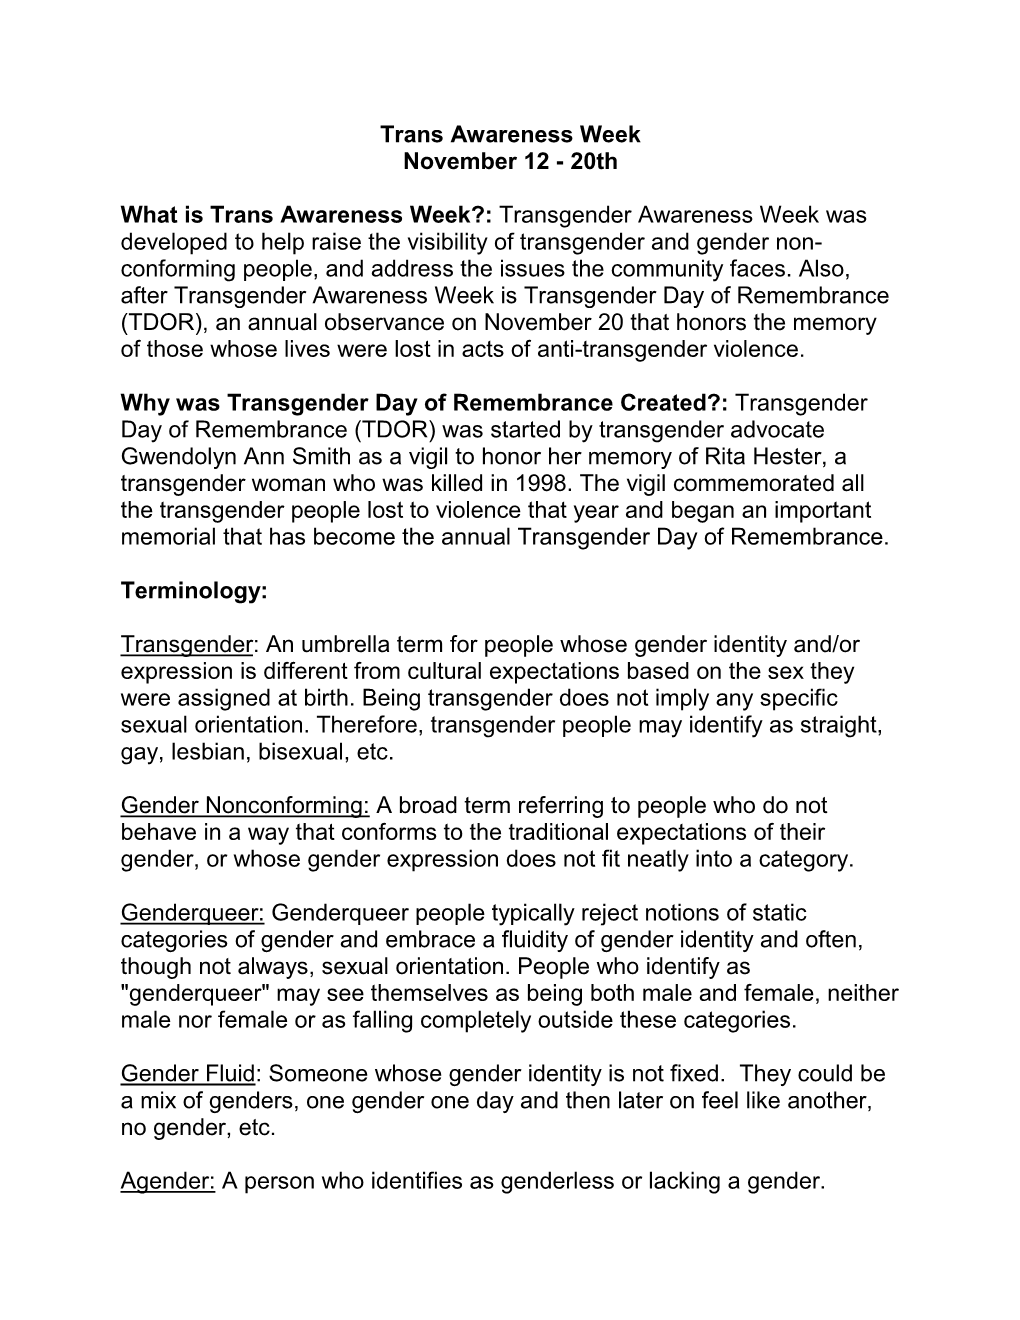 Trans Awareness Week November 12 - 20Th